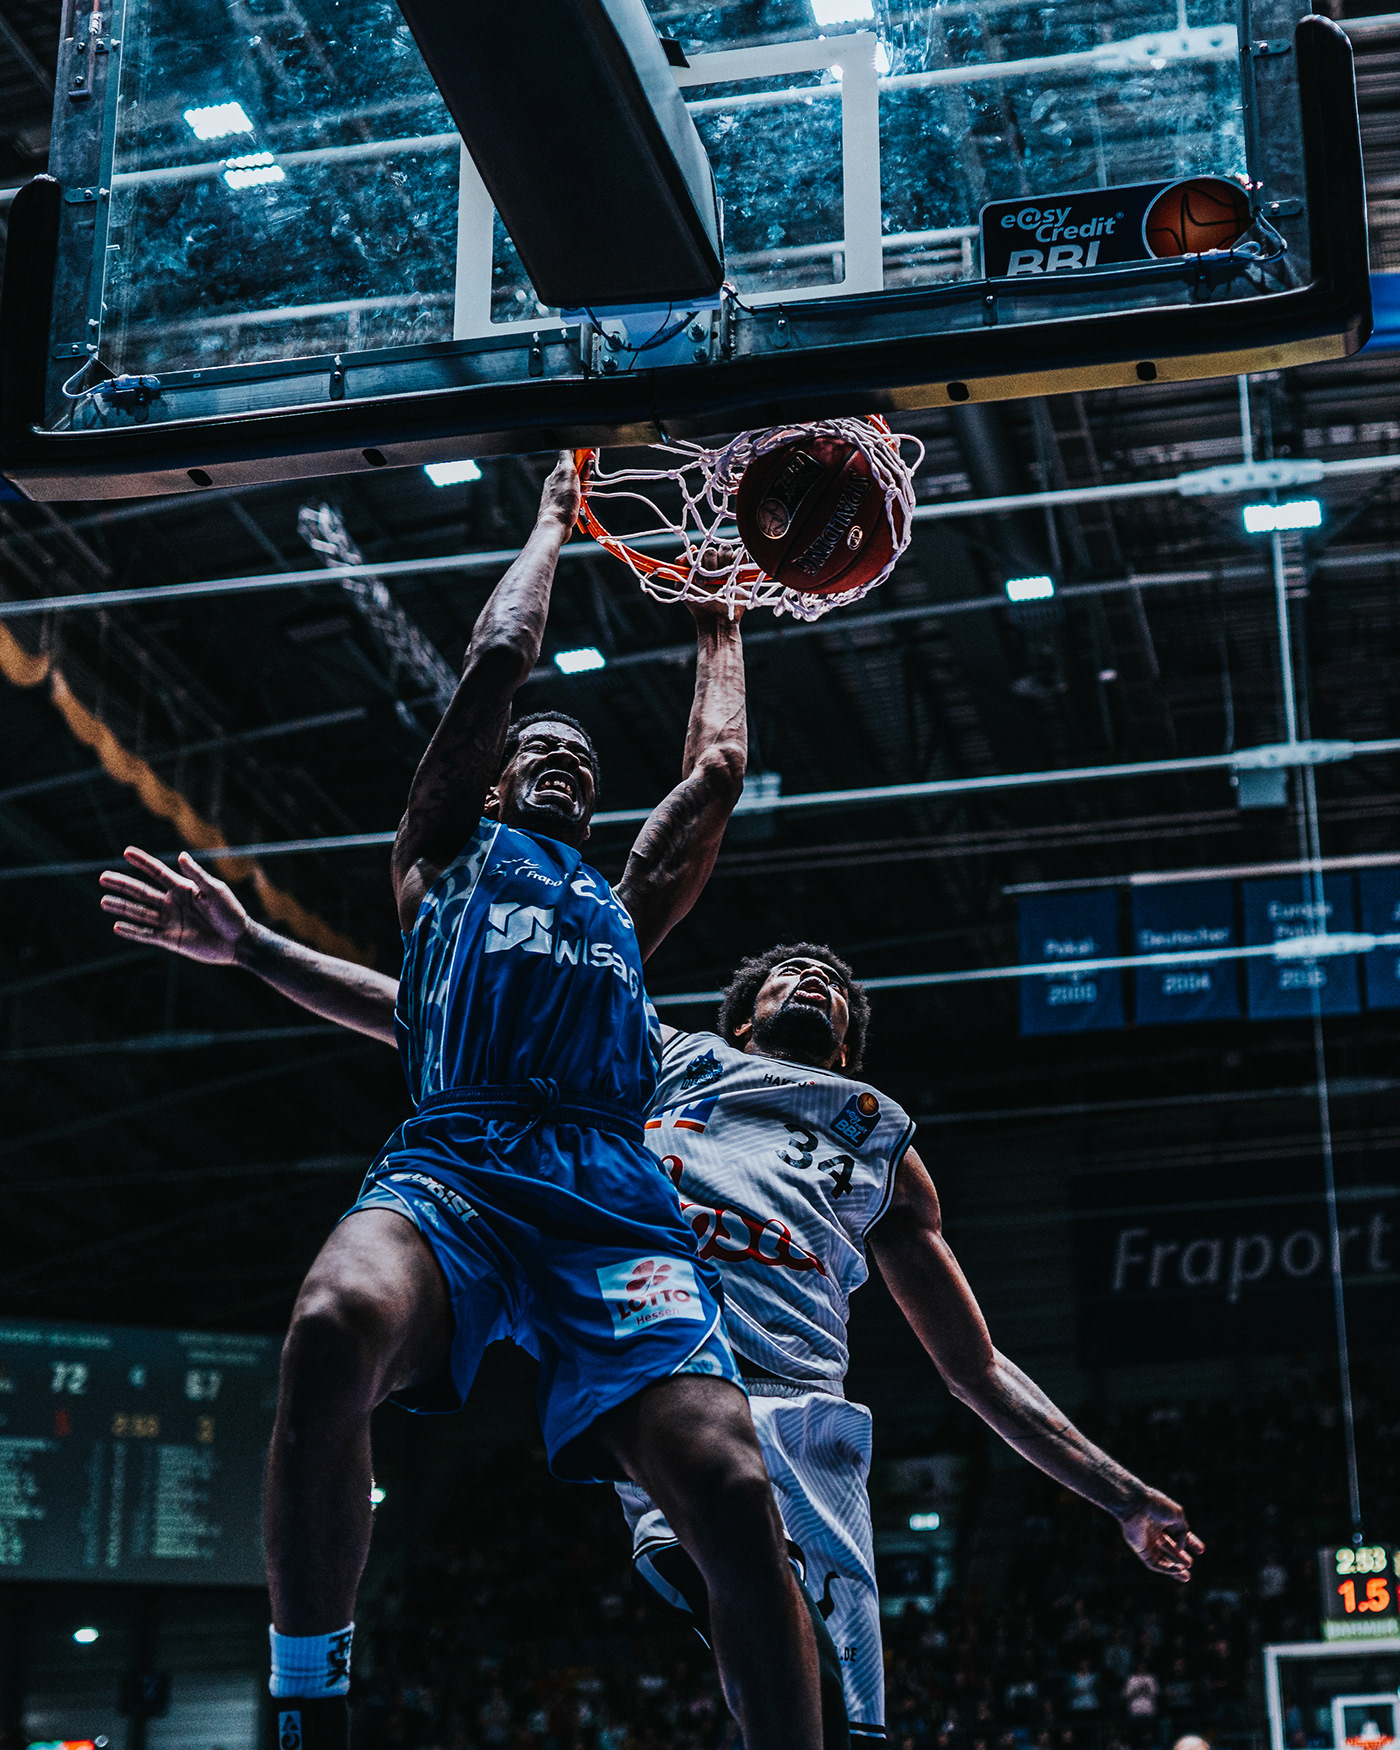 basketball bbl Basketball Bundesliga Fraport Skyliners dunking